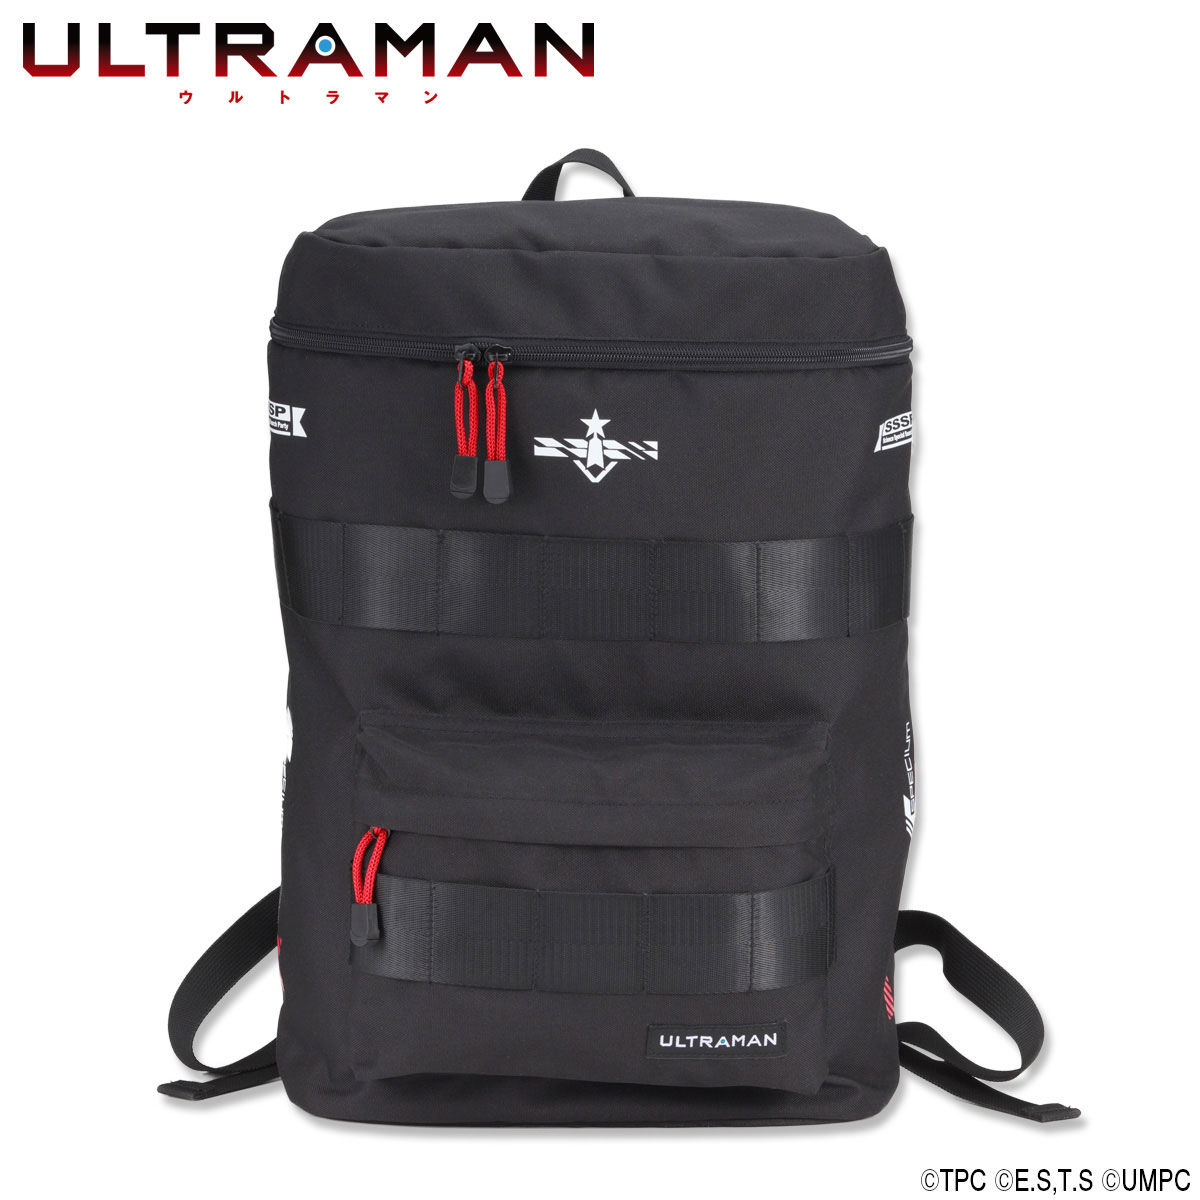 ULTRAMAN Backpack